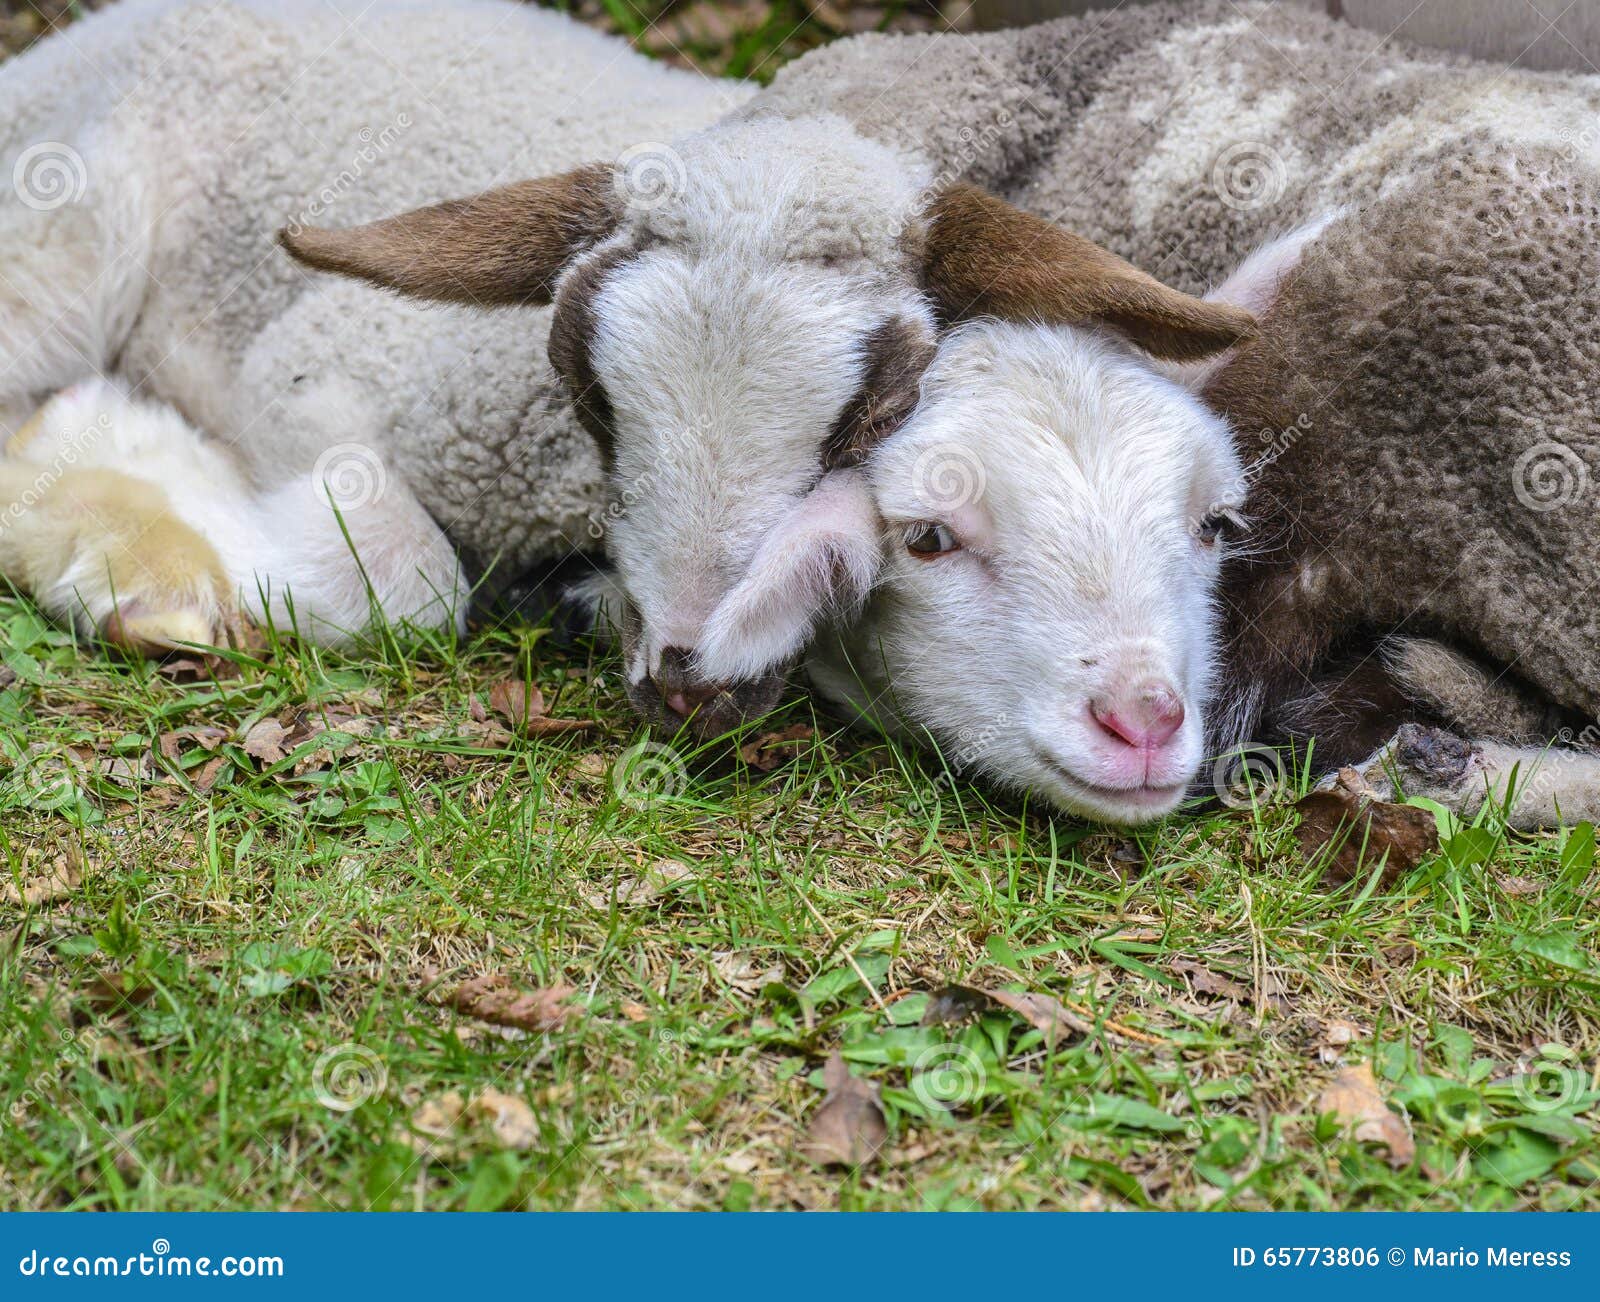 Lambs. Unga lamm som matar på gräs